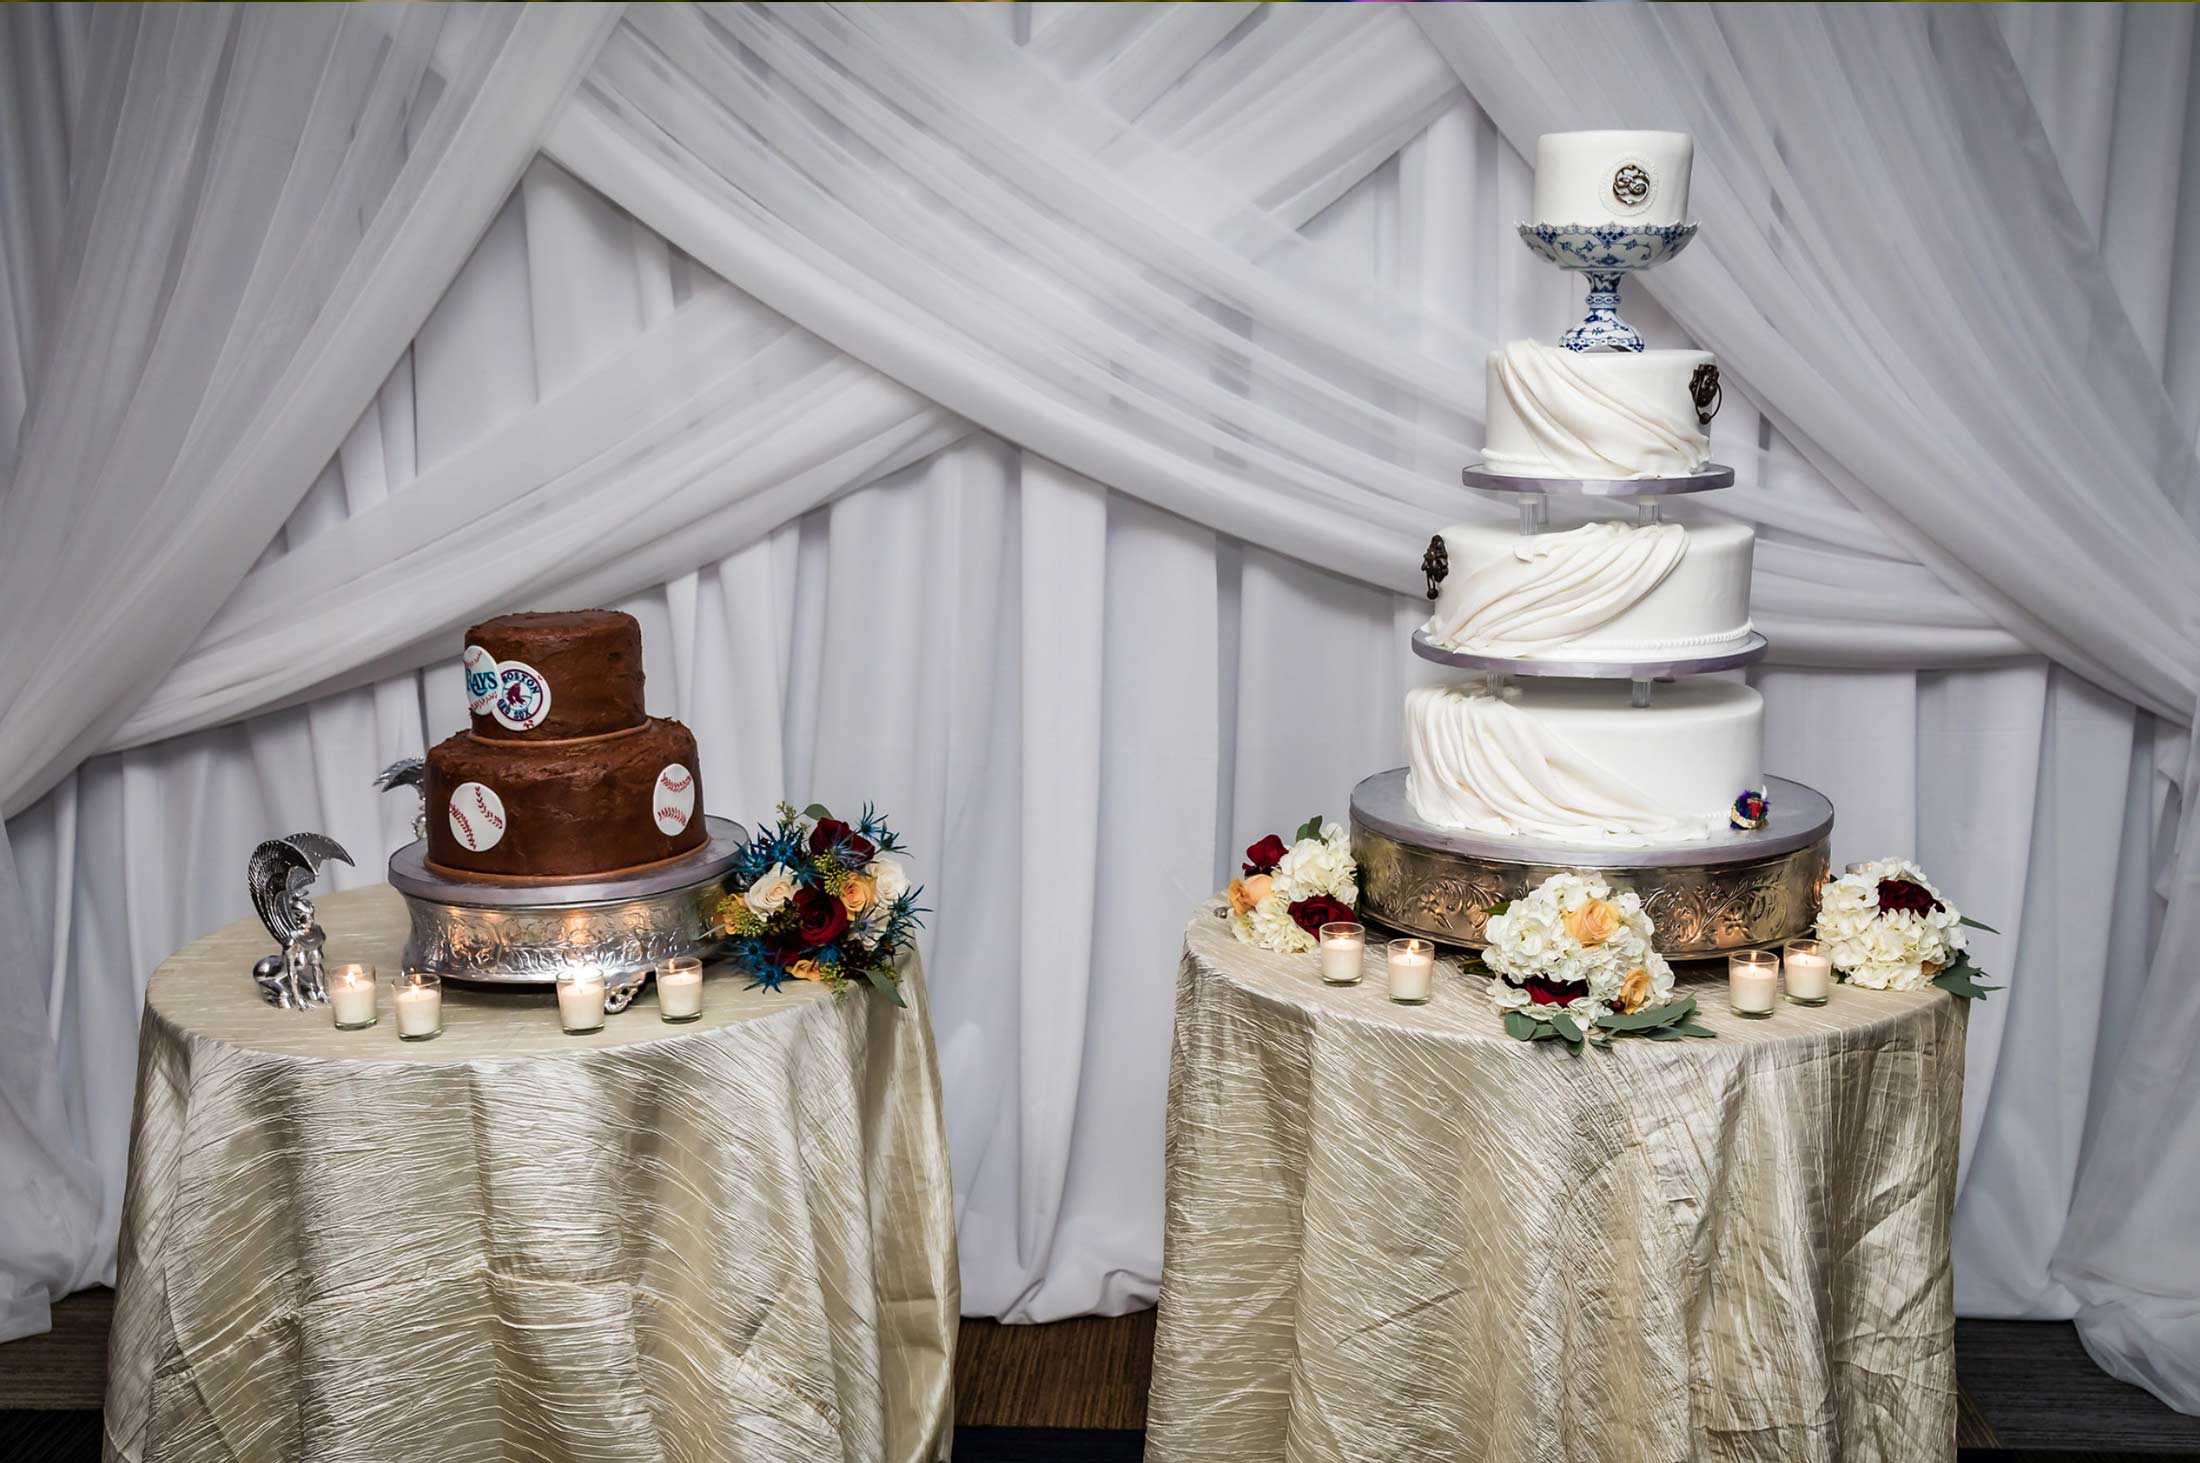 Chocolate groom's cake and 4-tier wedding cake